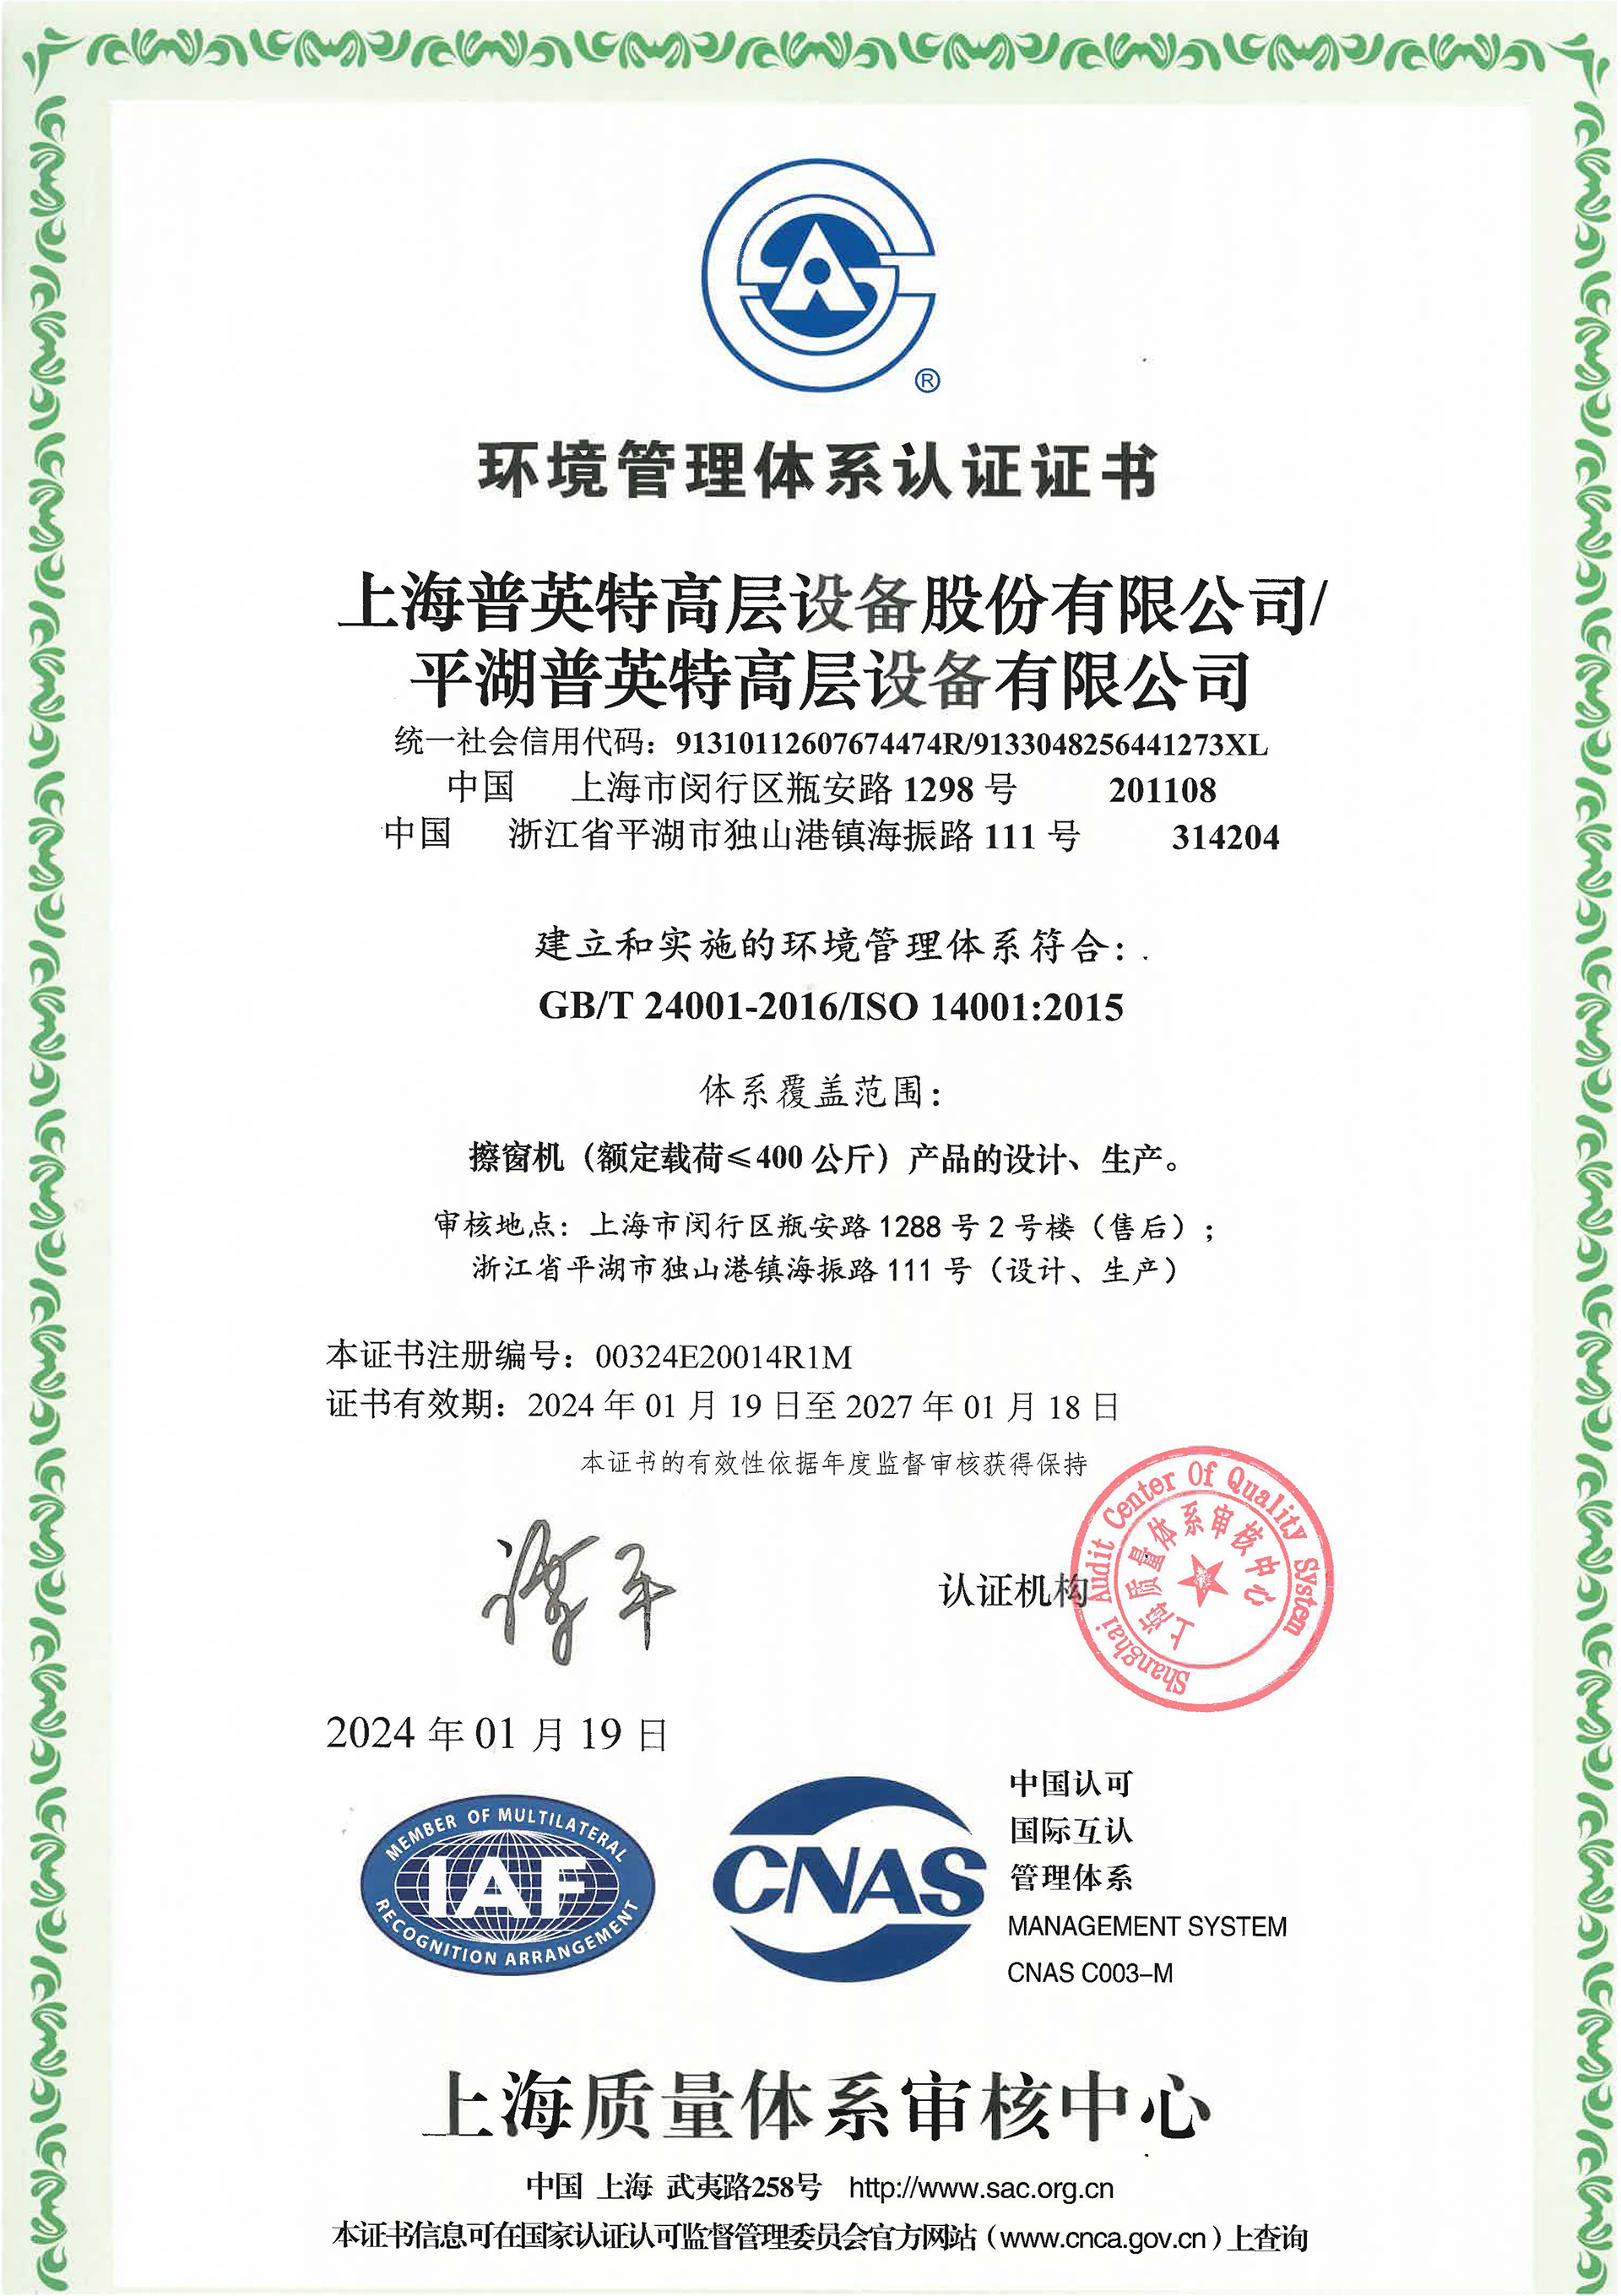 Environmental Management System Certification